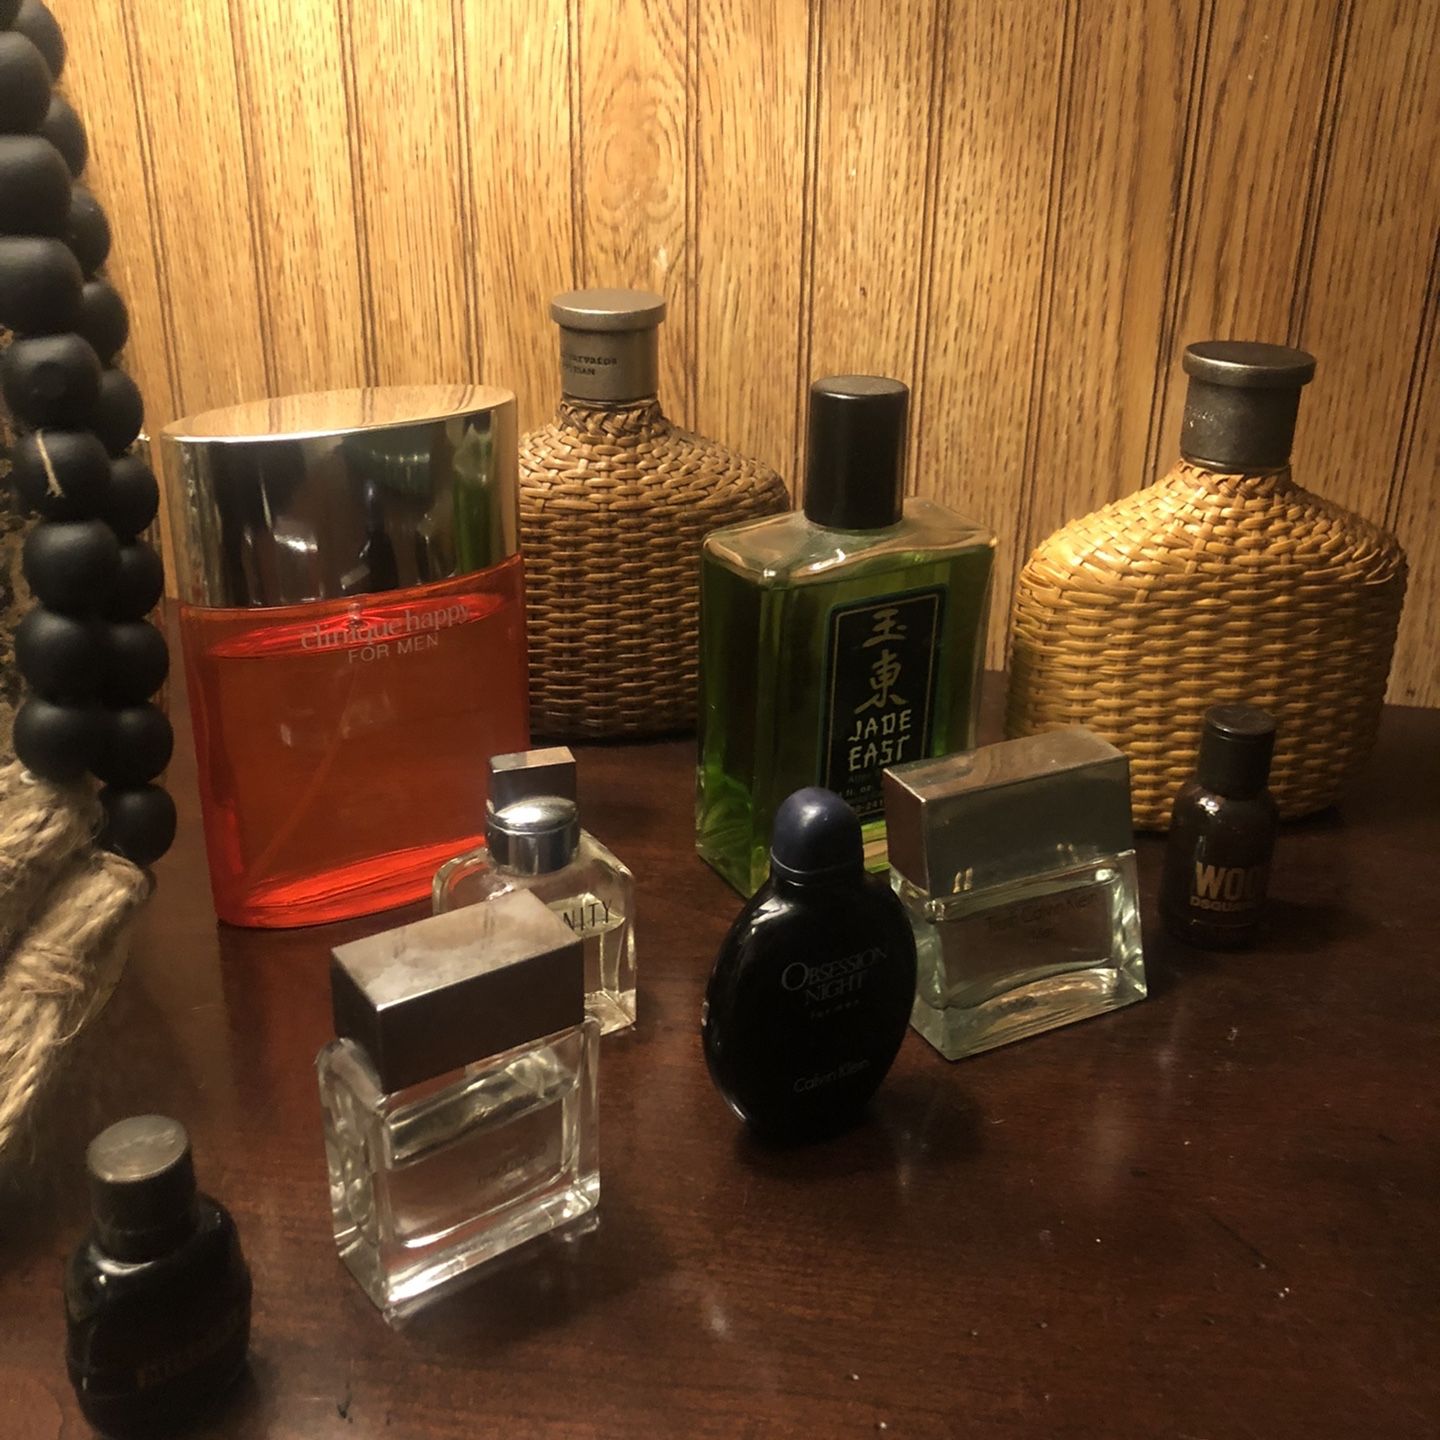 used chanel perfume